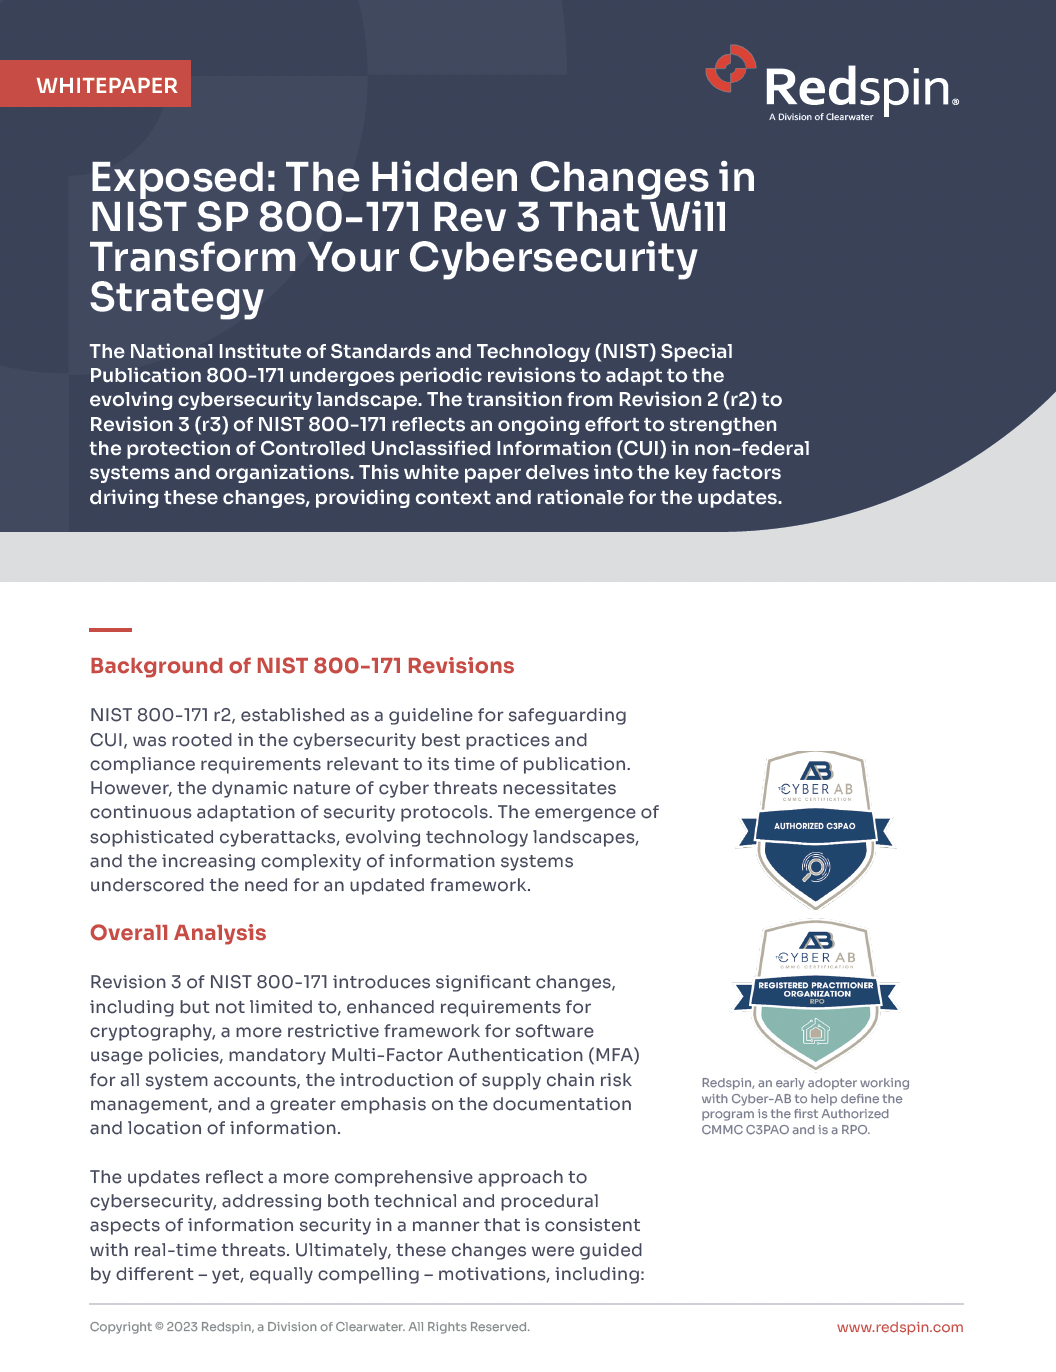 NIST SP 800-171 Revision 3 Changes